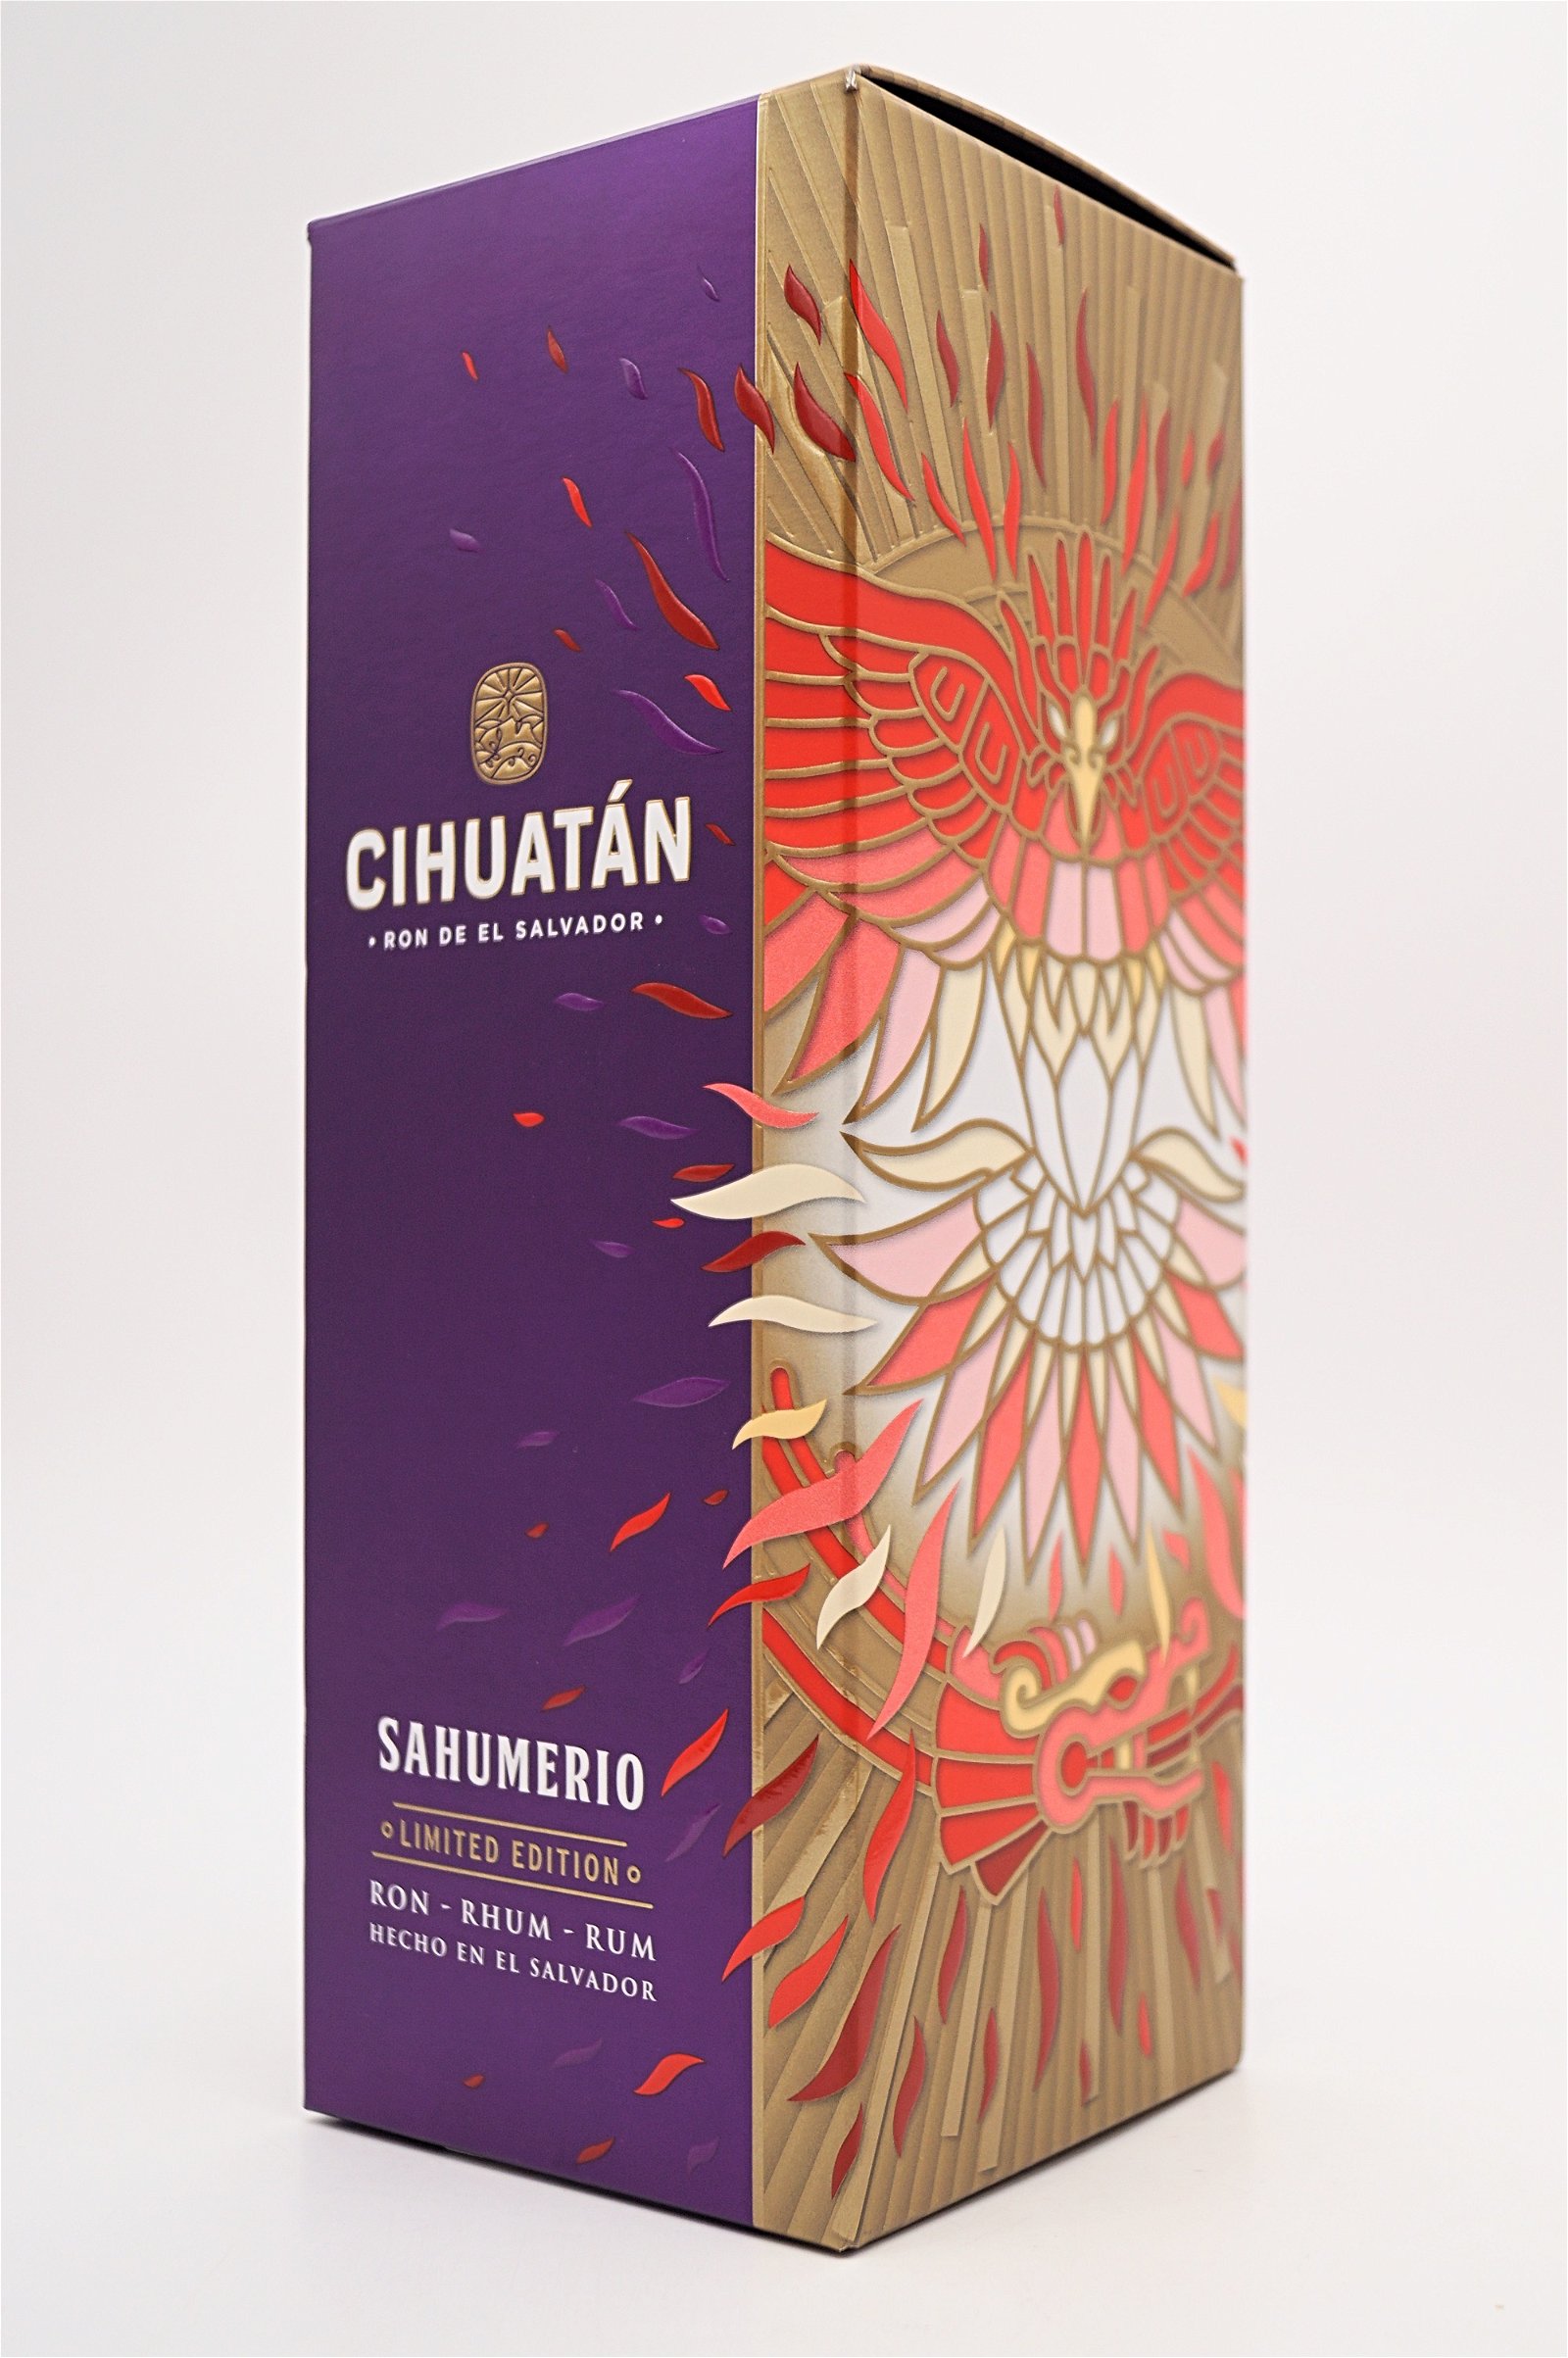 Ron Cihuatan Sahumerio Rum Limited Edition